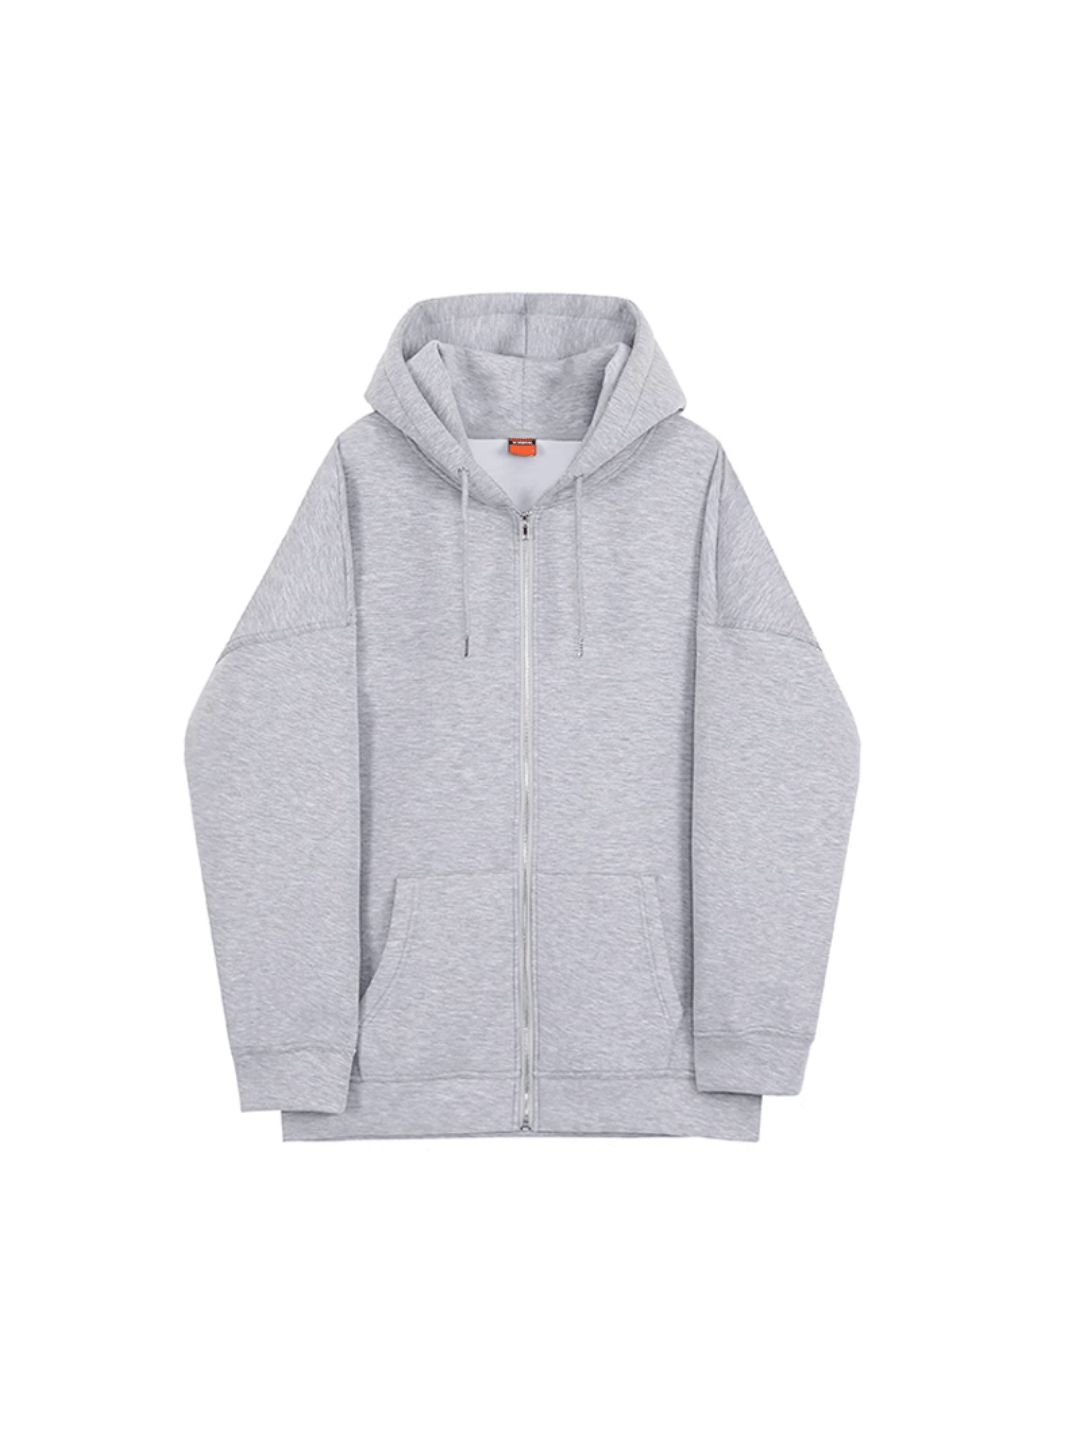 [MRCYC] Autumn sweatshirt hooded na844